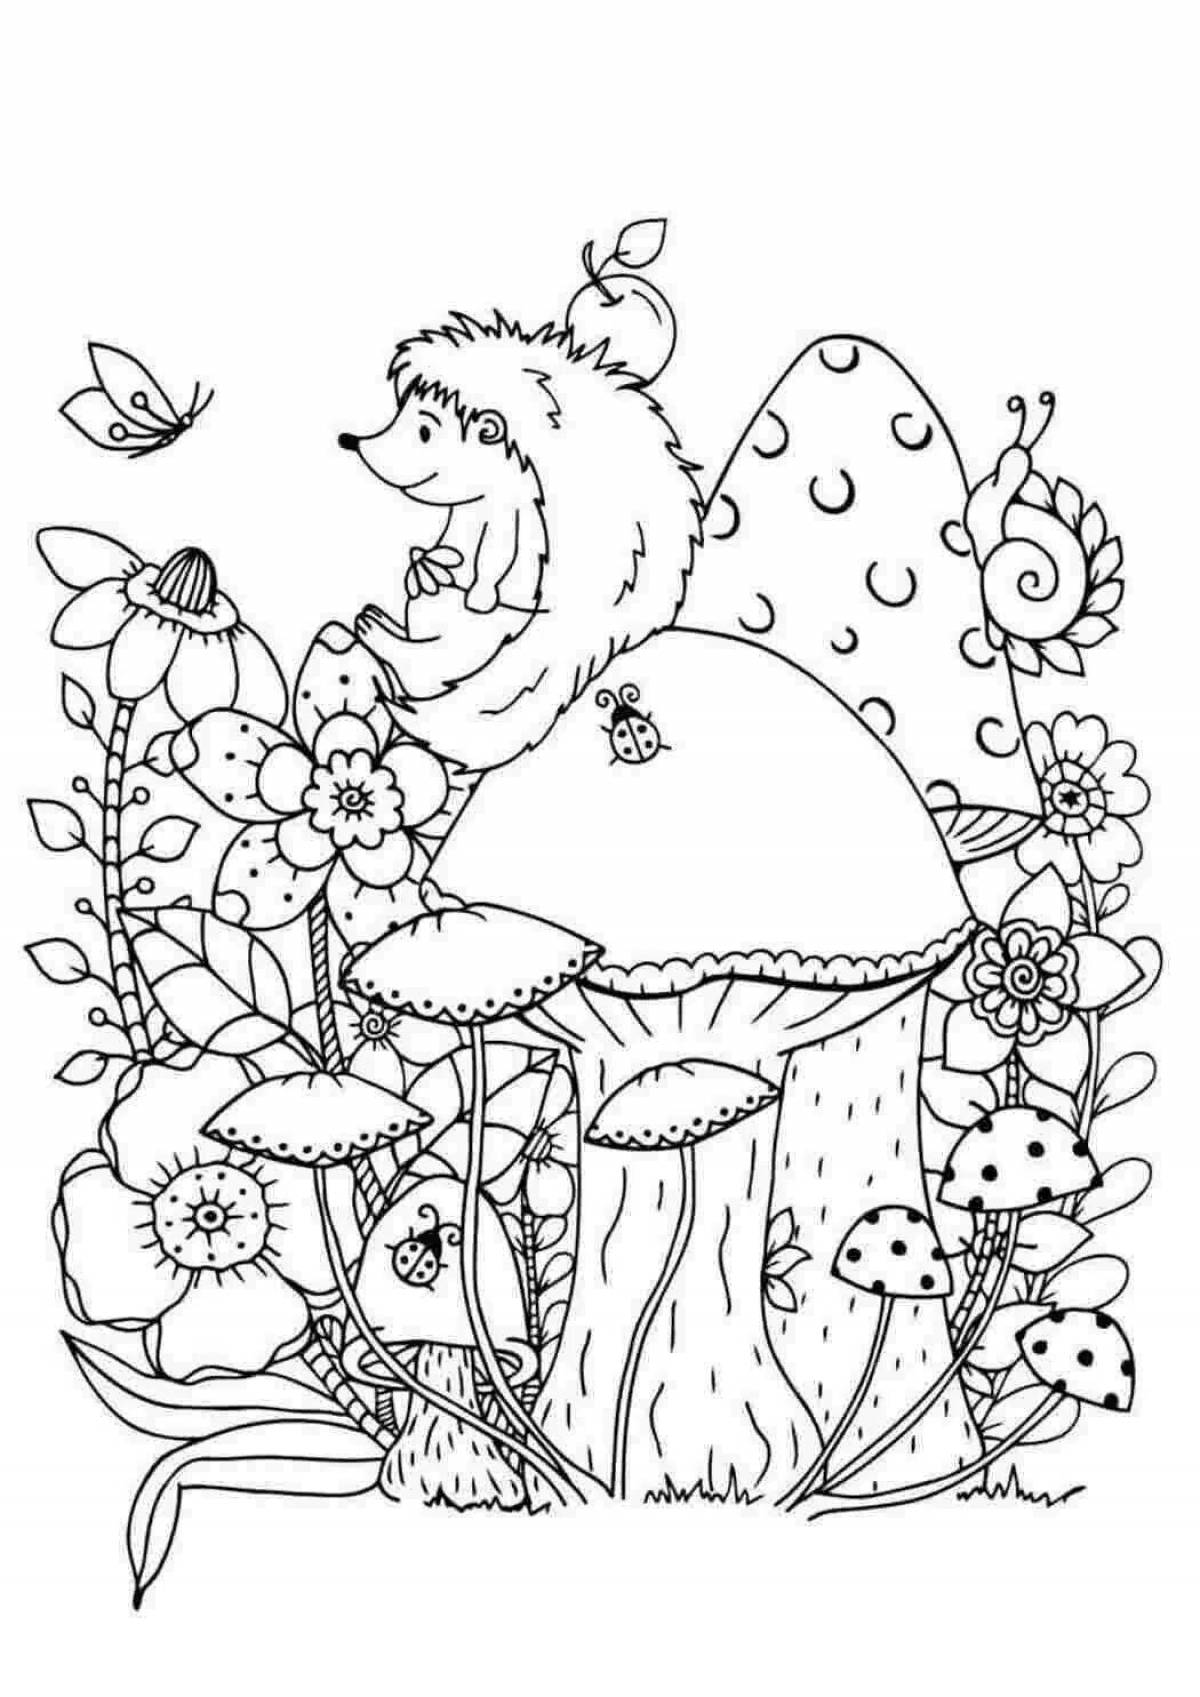 Coloring book magical anti-stress hedgehog